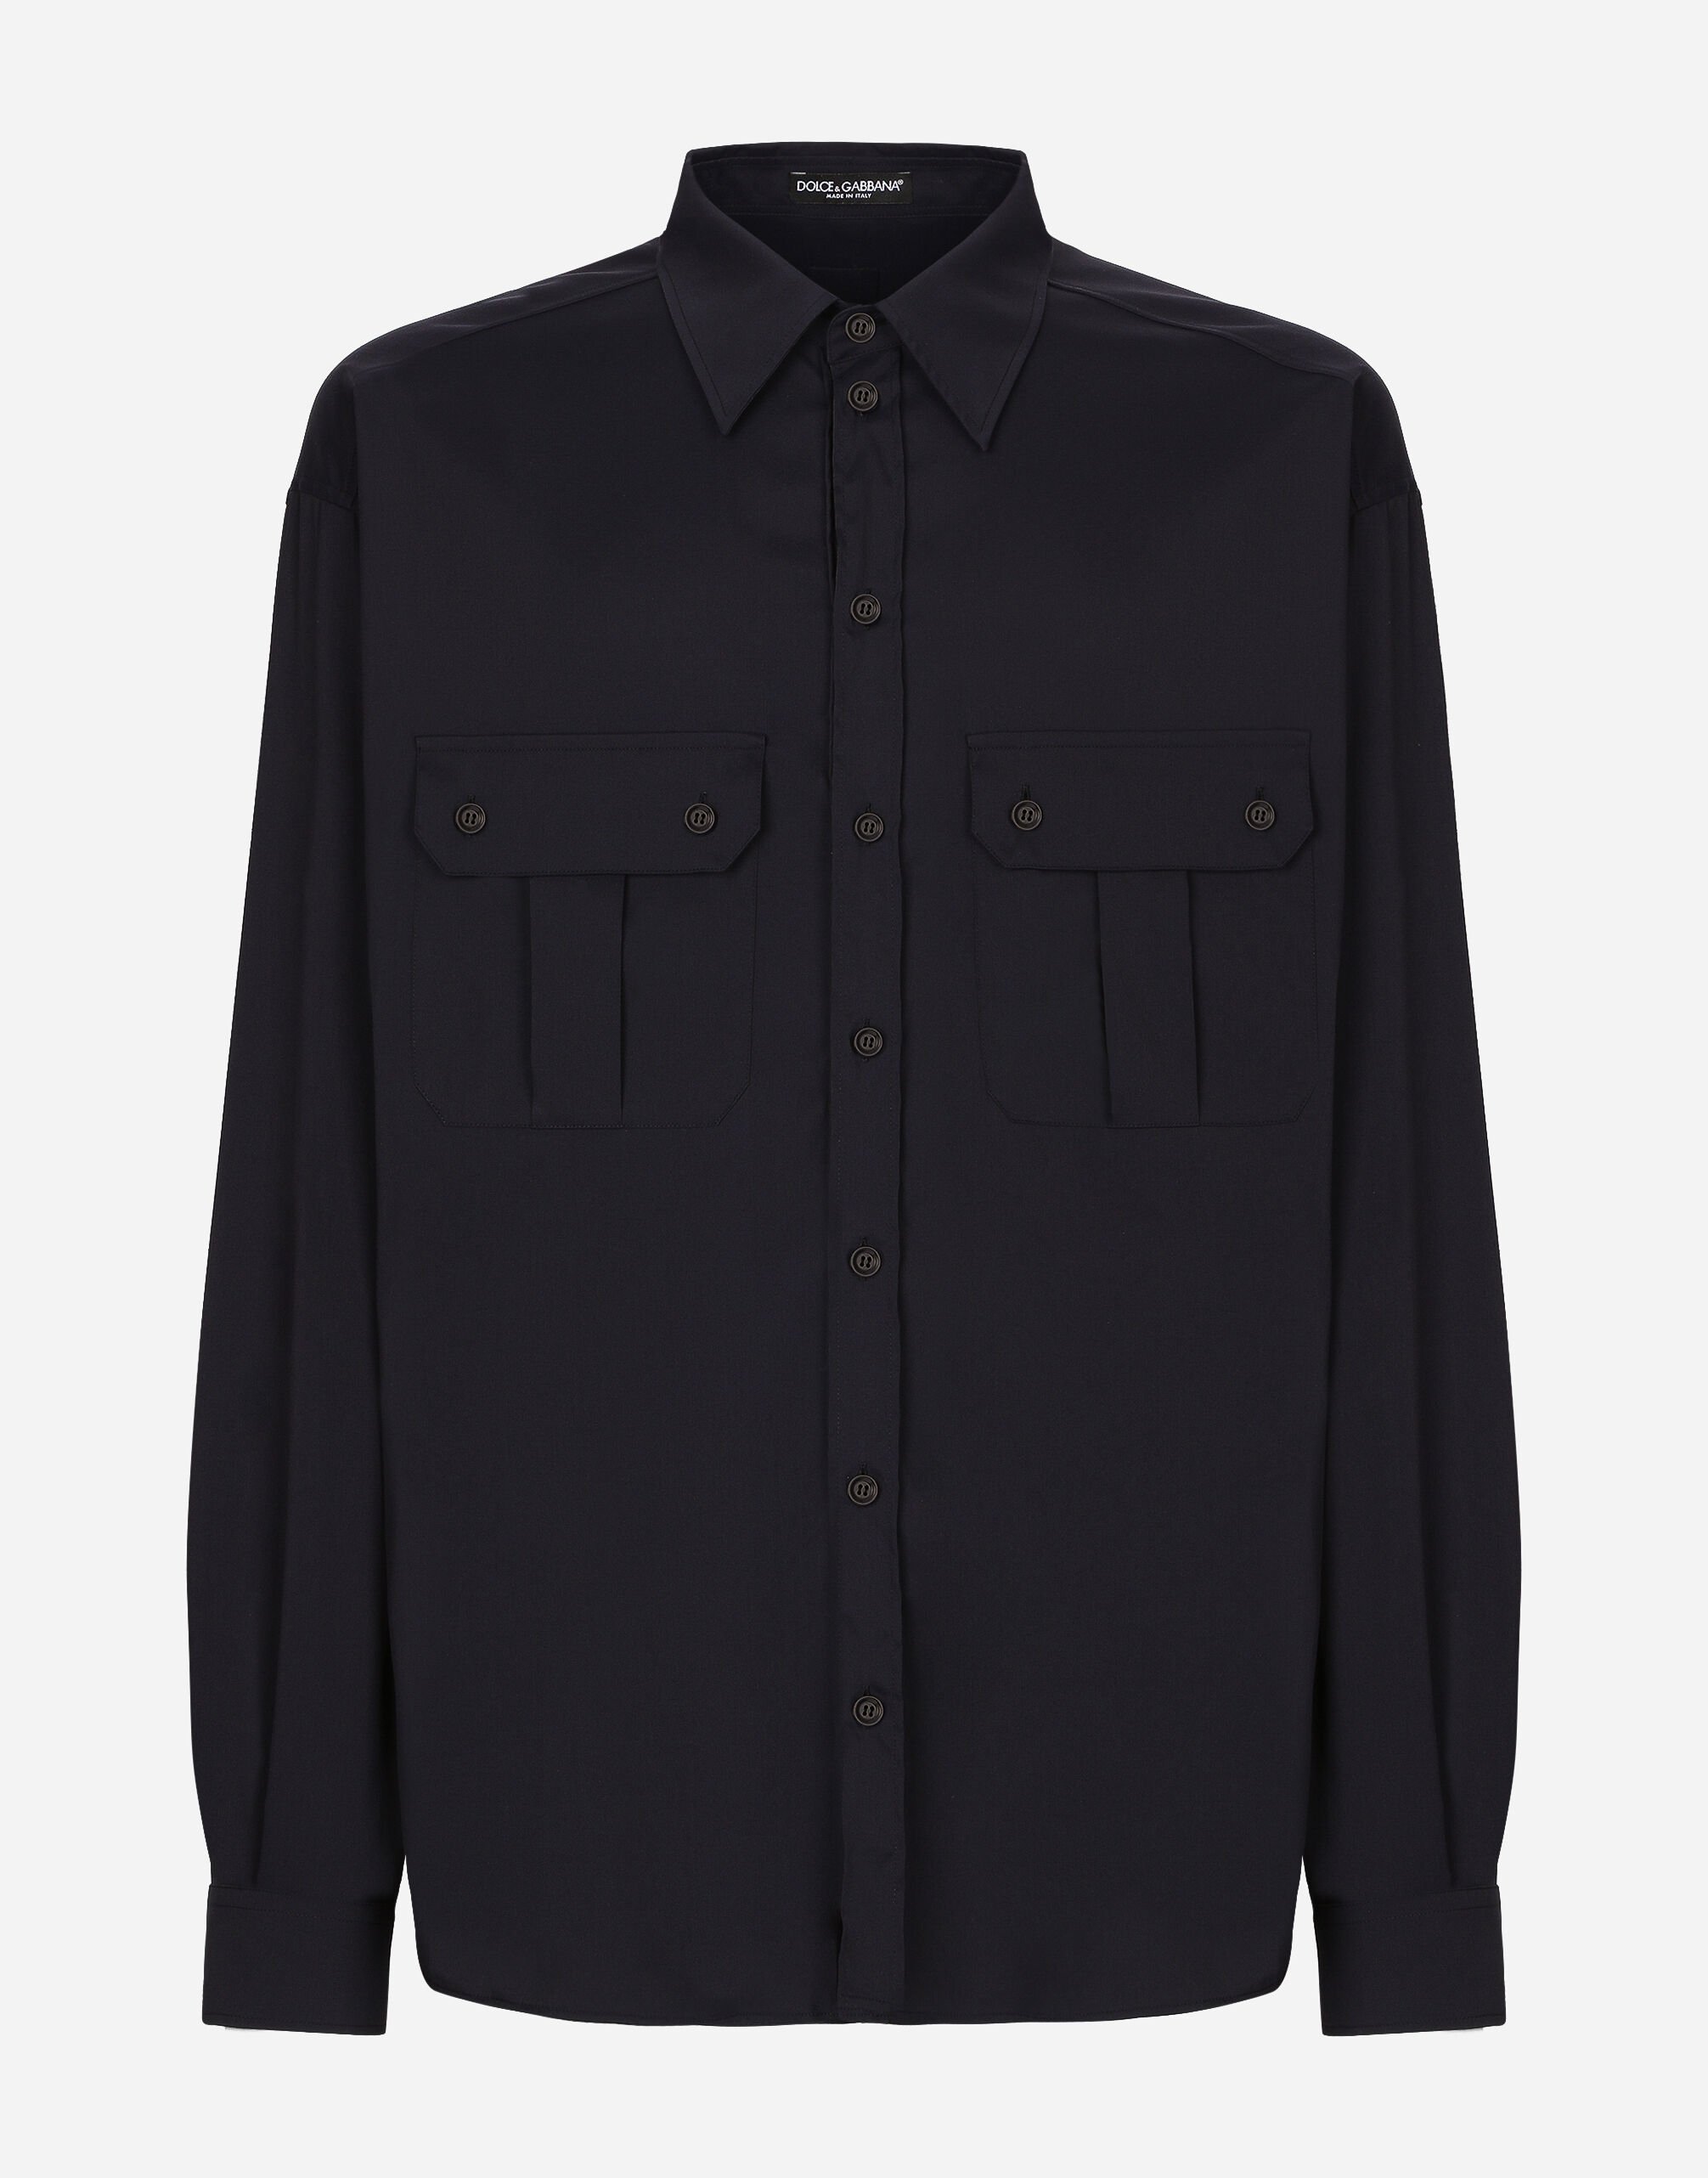 Dolce & Gabbana Technical fabric shirt with pockets Print G5IF1THI1QA